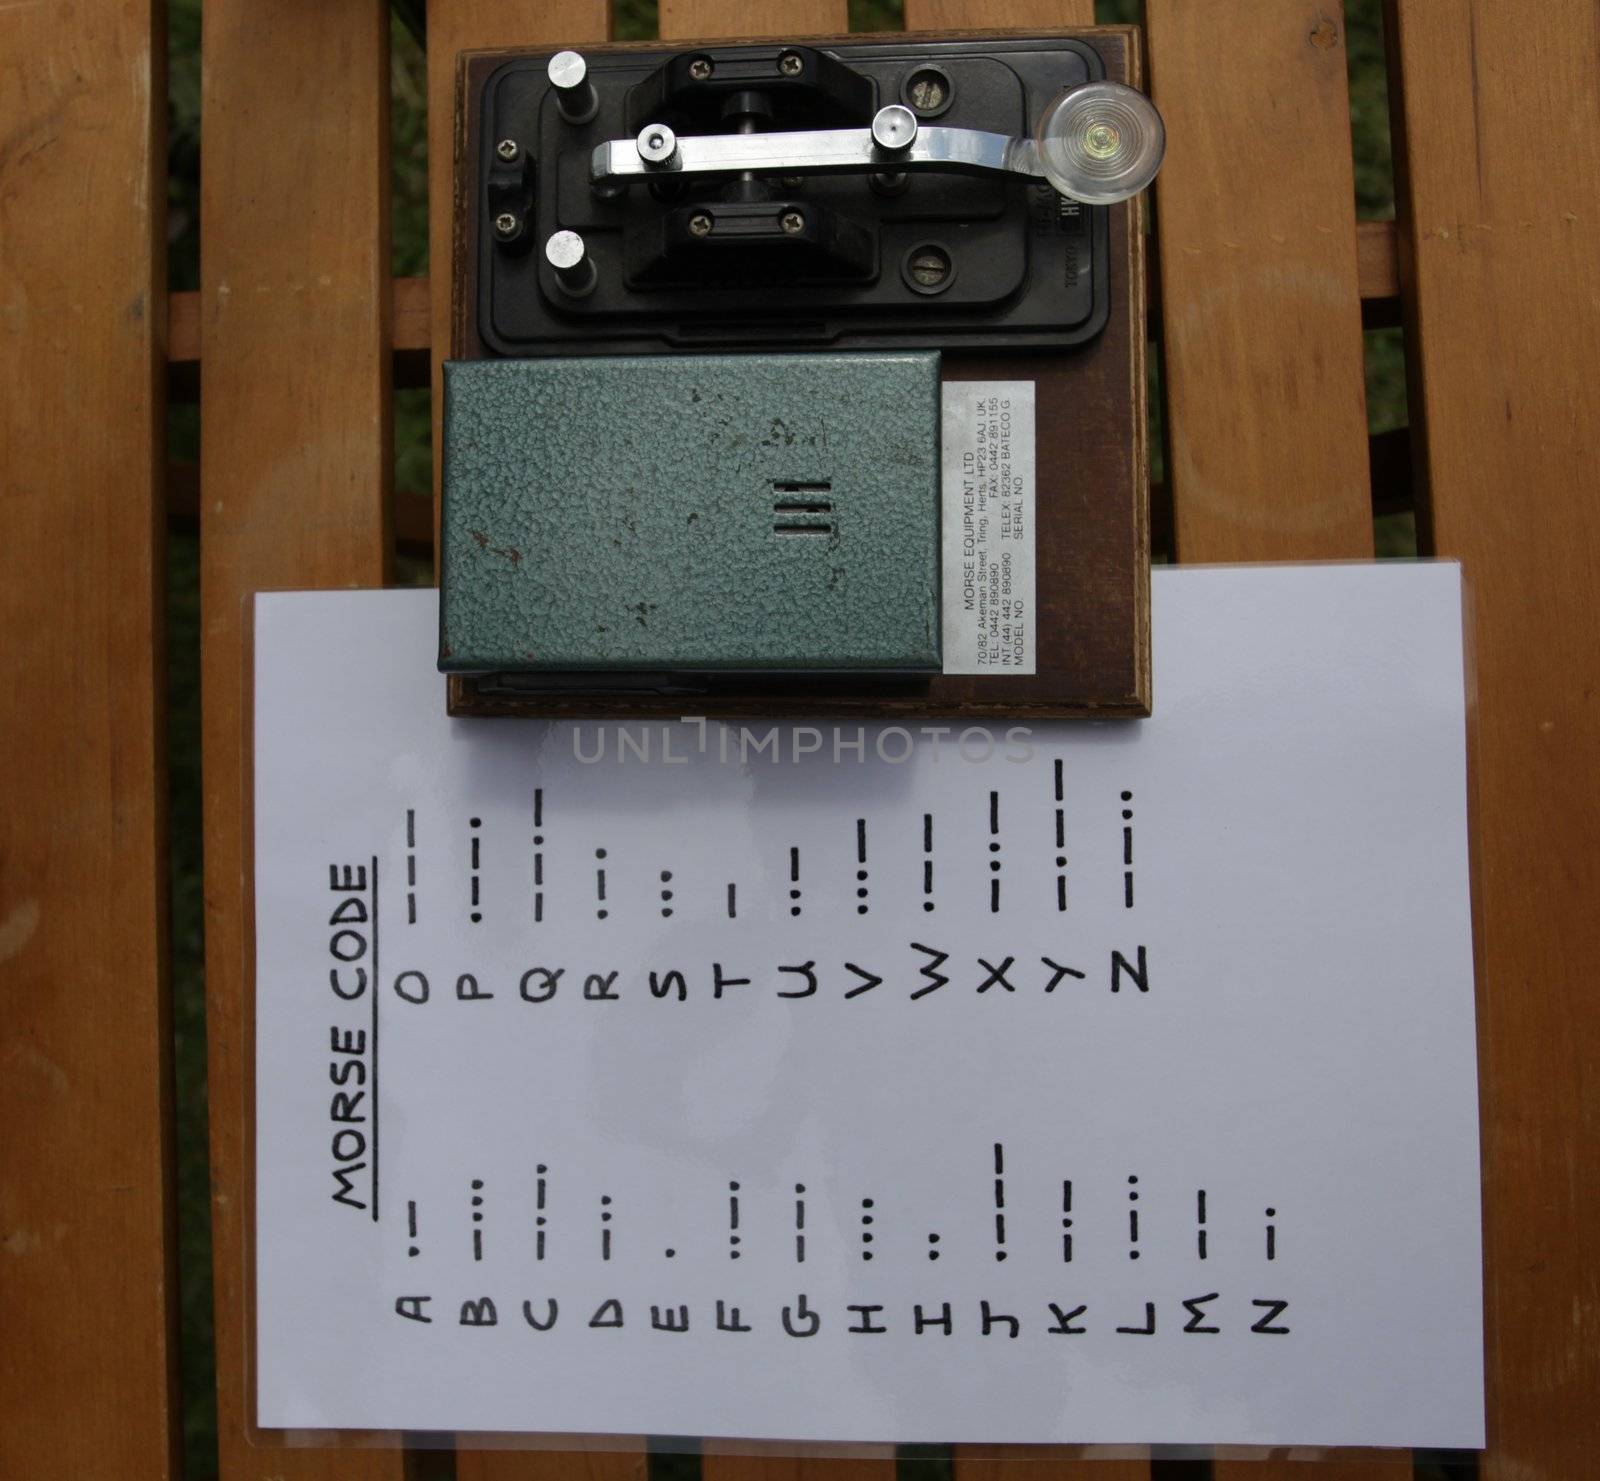 Old world war 2 Morse code transmitter